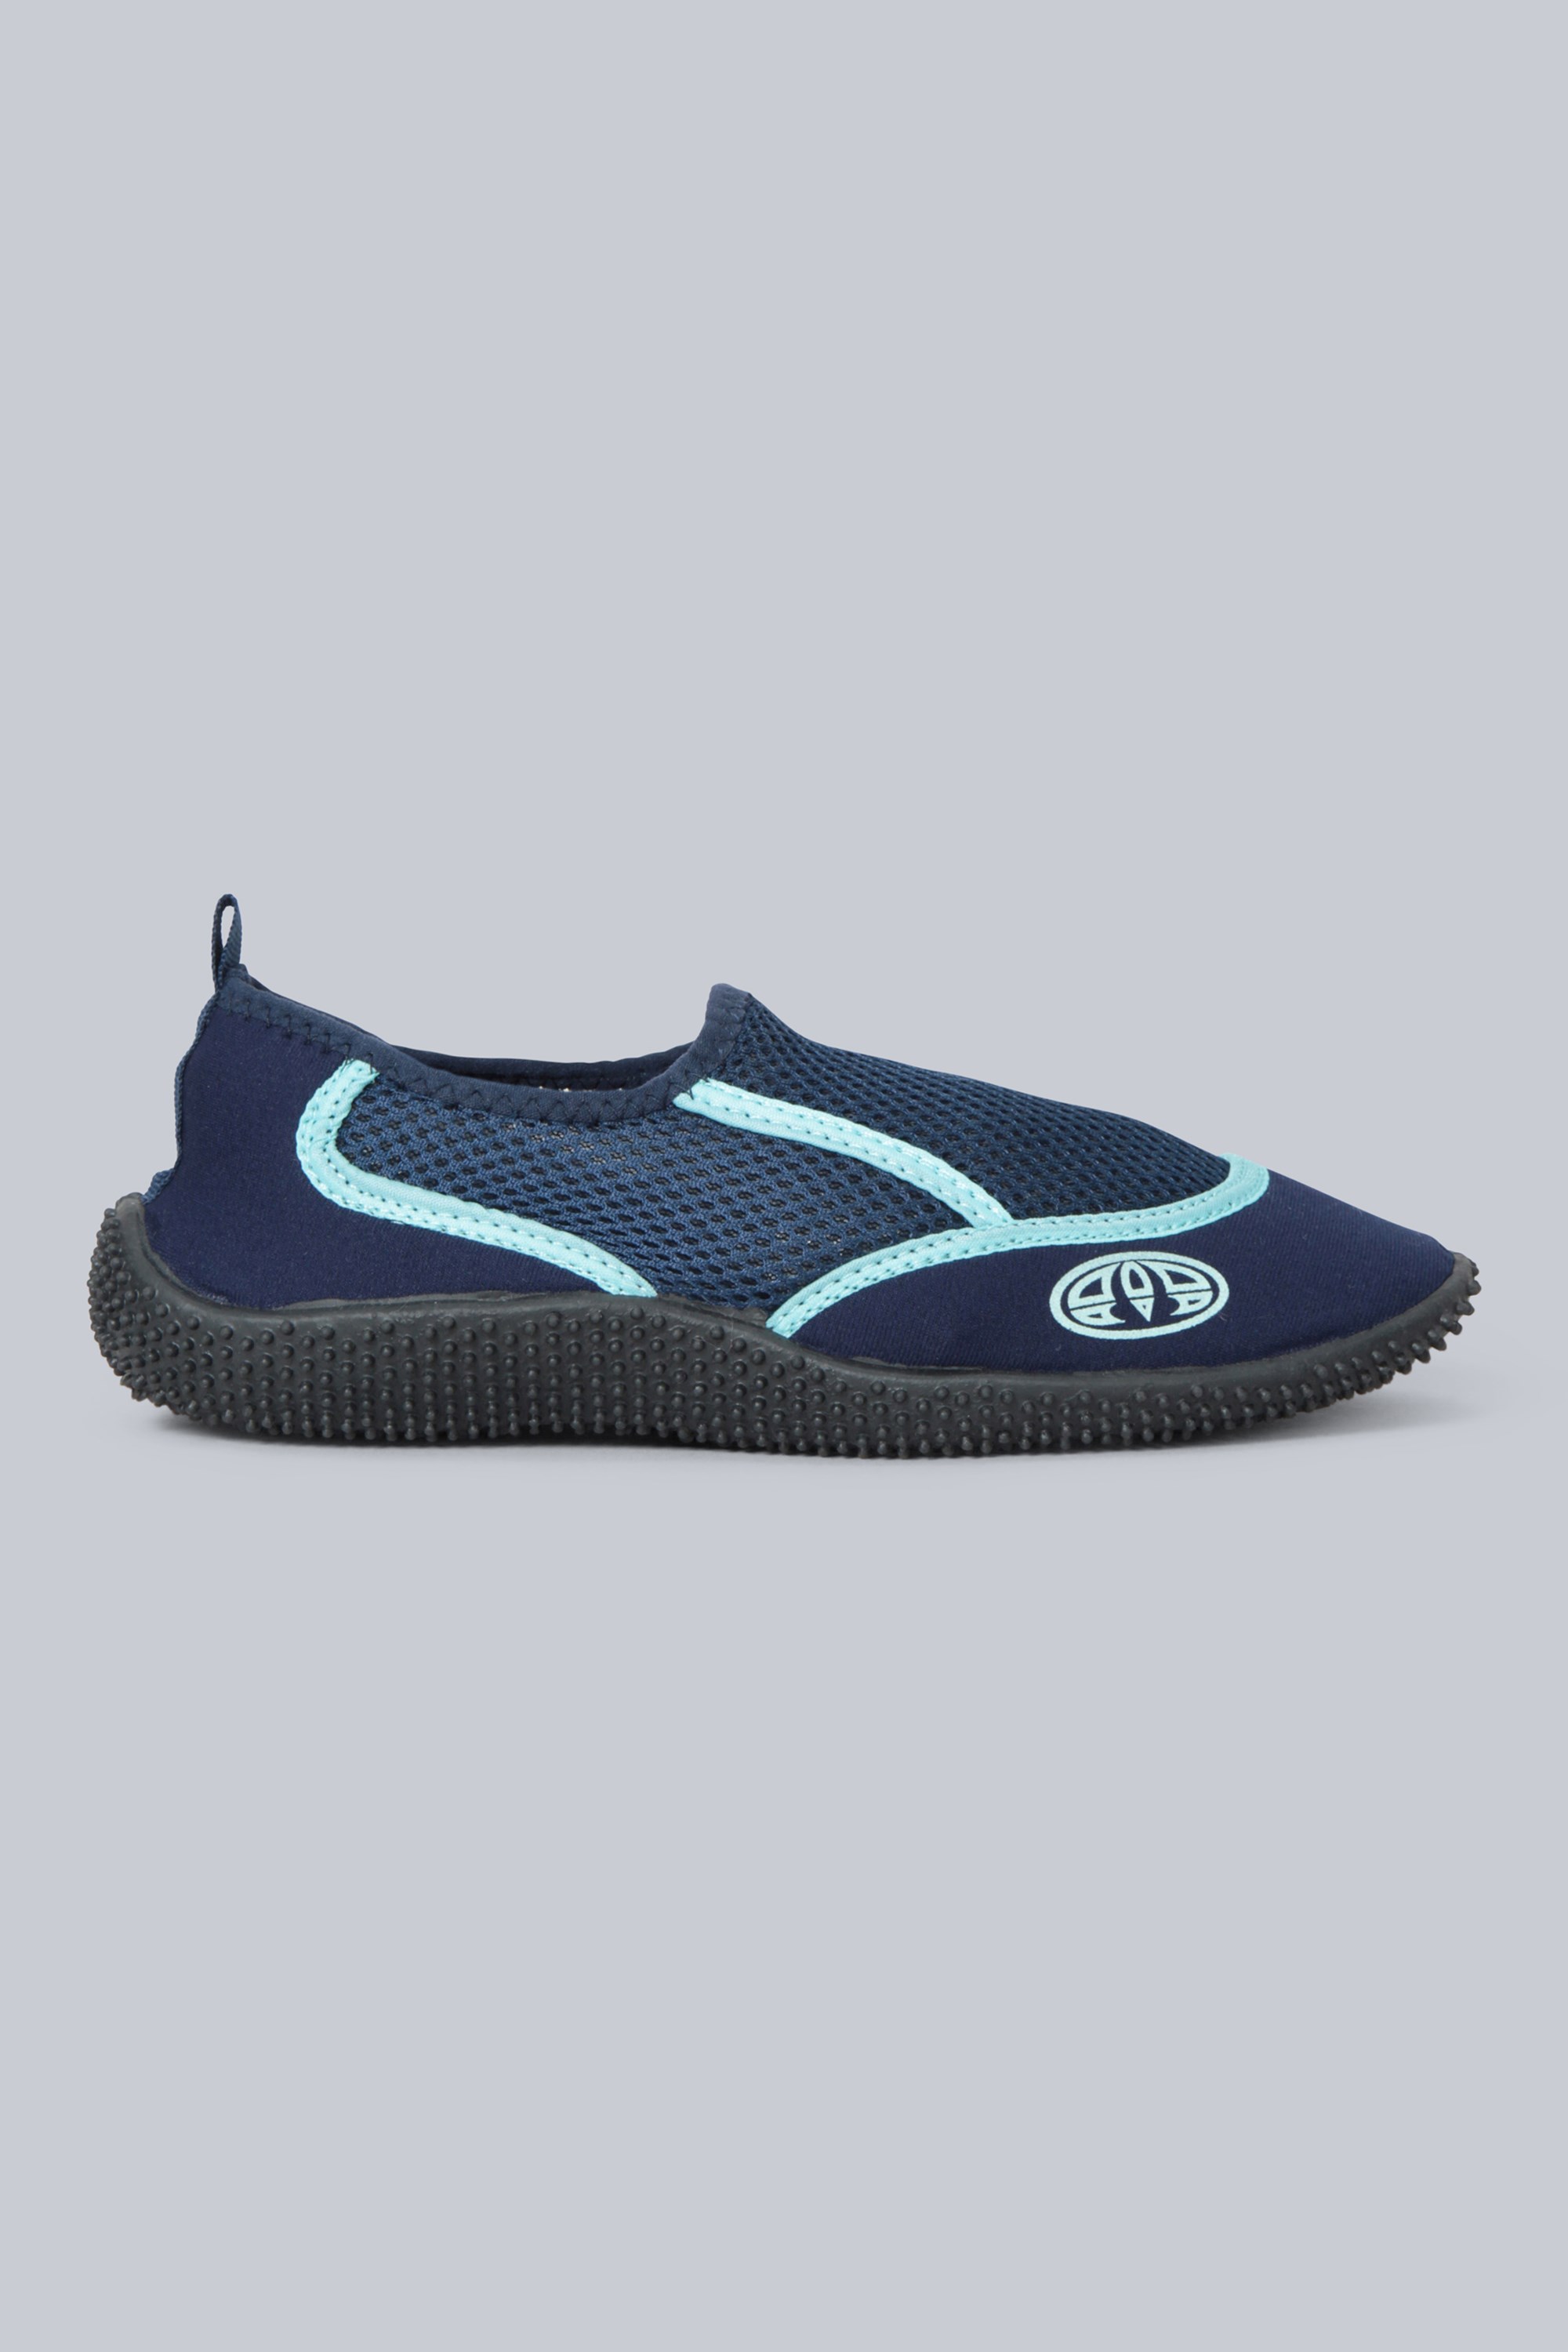 Shoes & Aqua Shoes | Mountain Warehouse GB